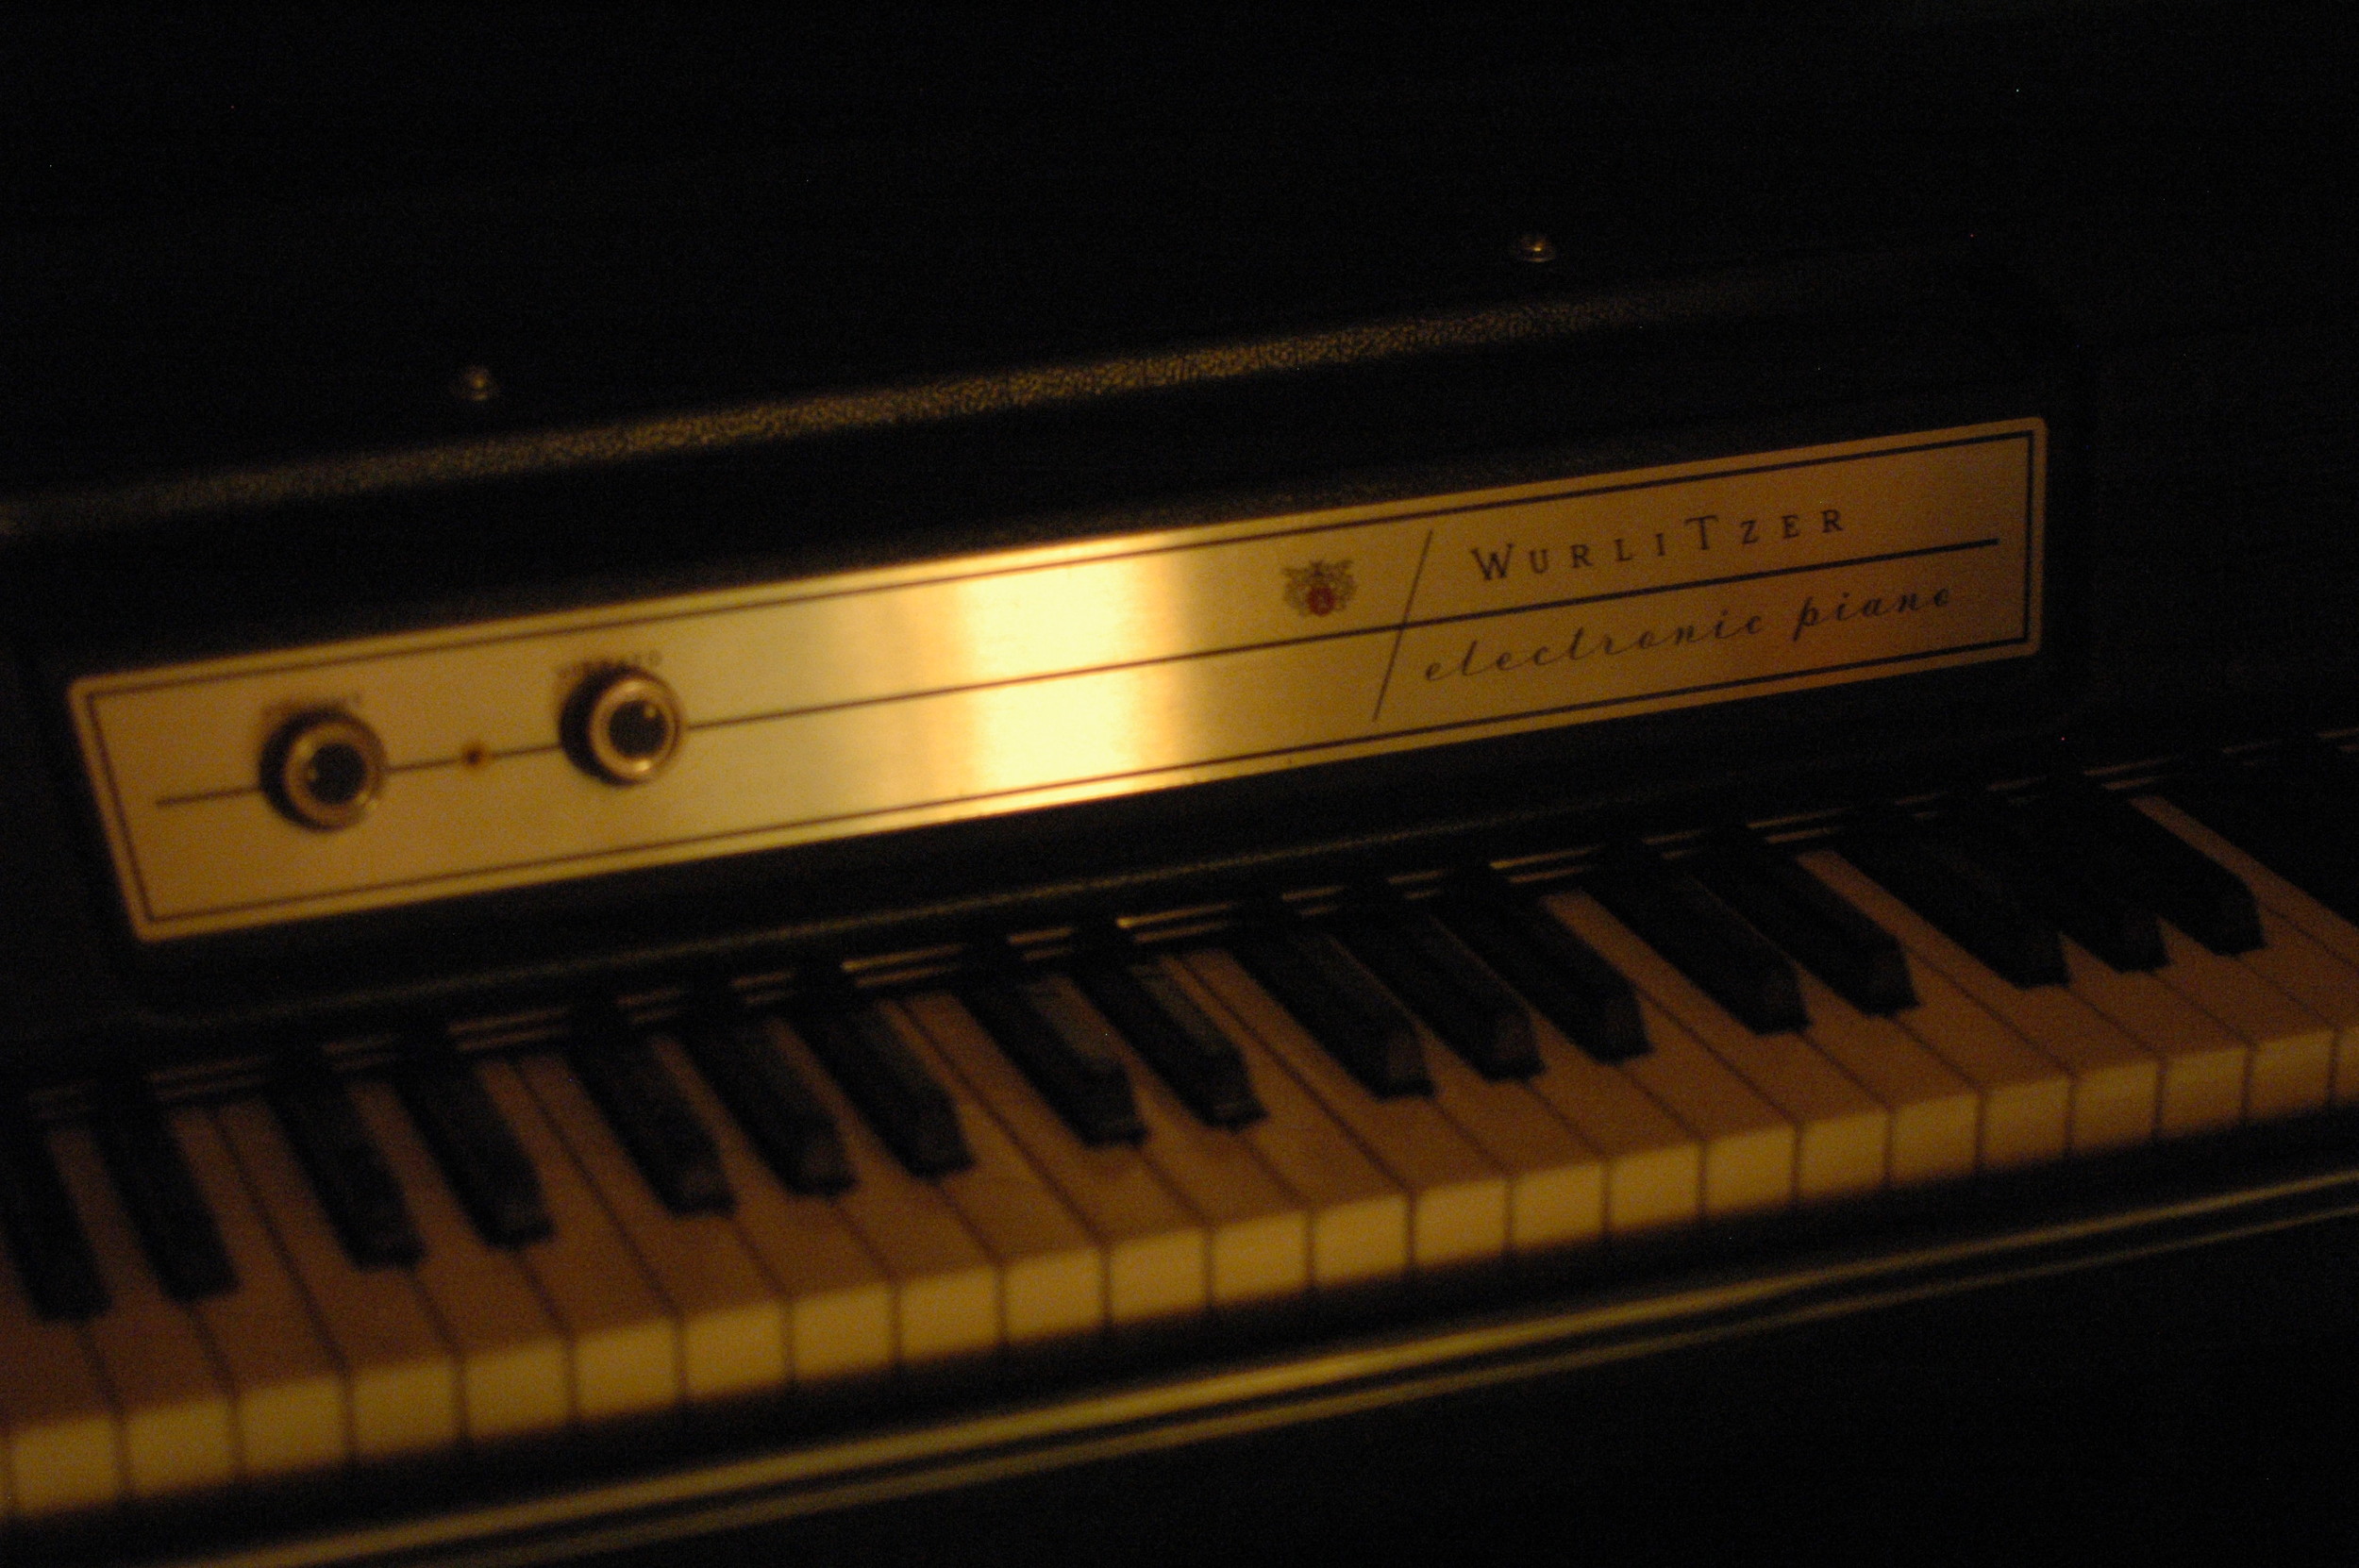 Wurlitzer 200 electric piano keyboard at Look to Listen Studios